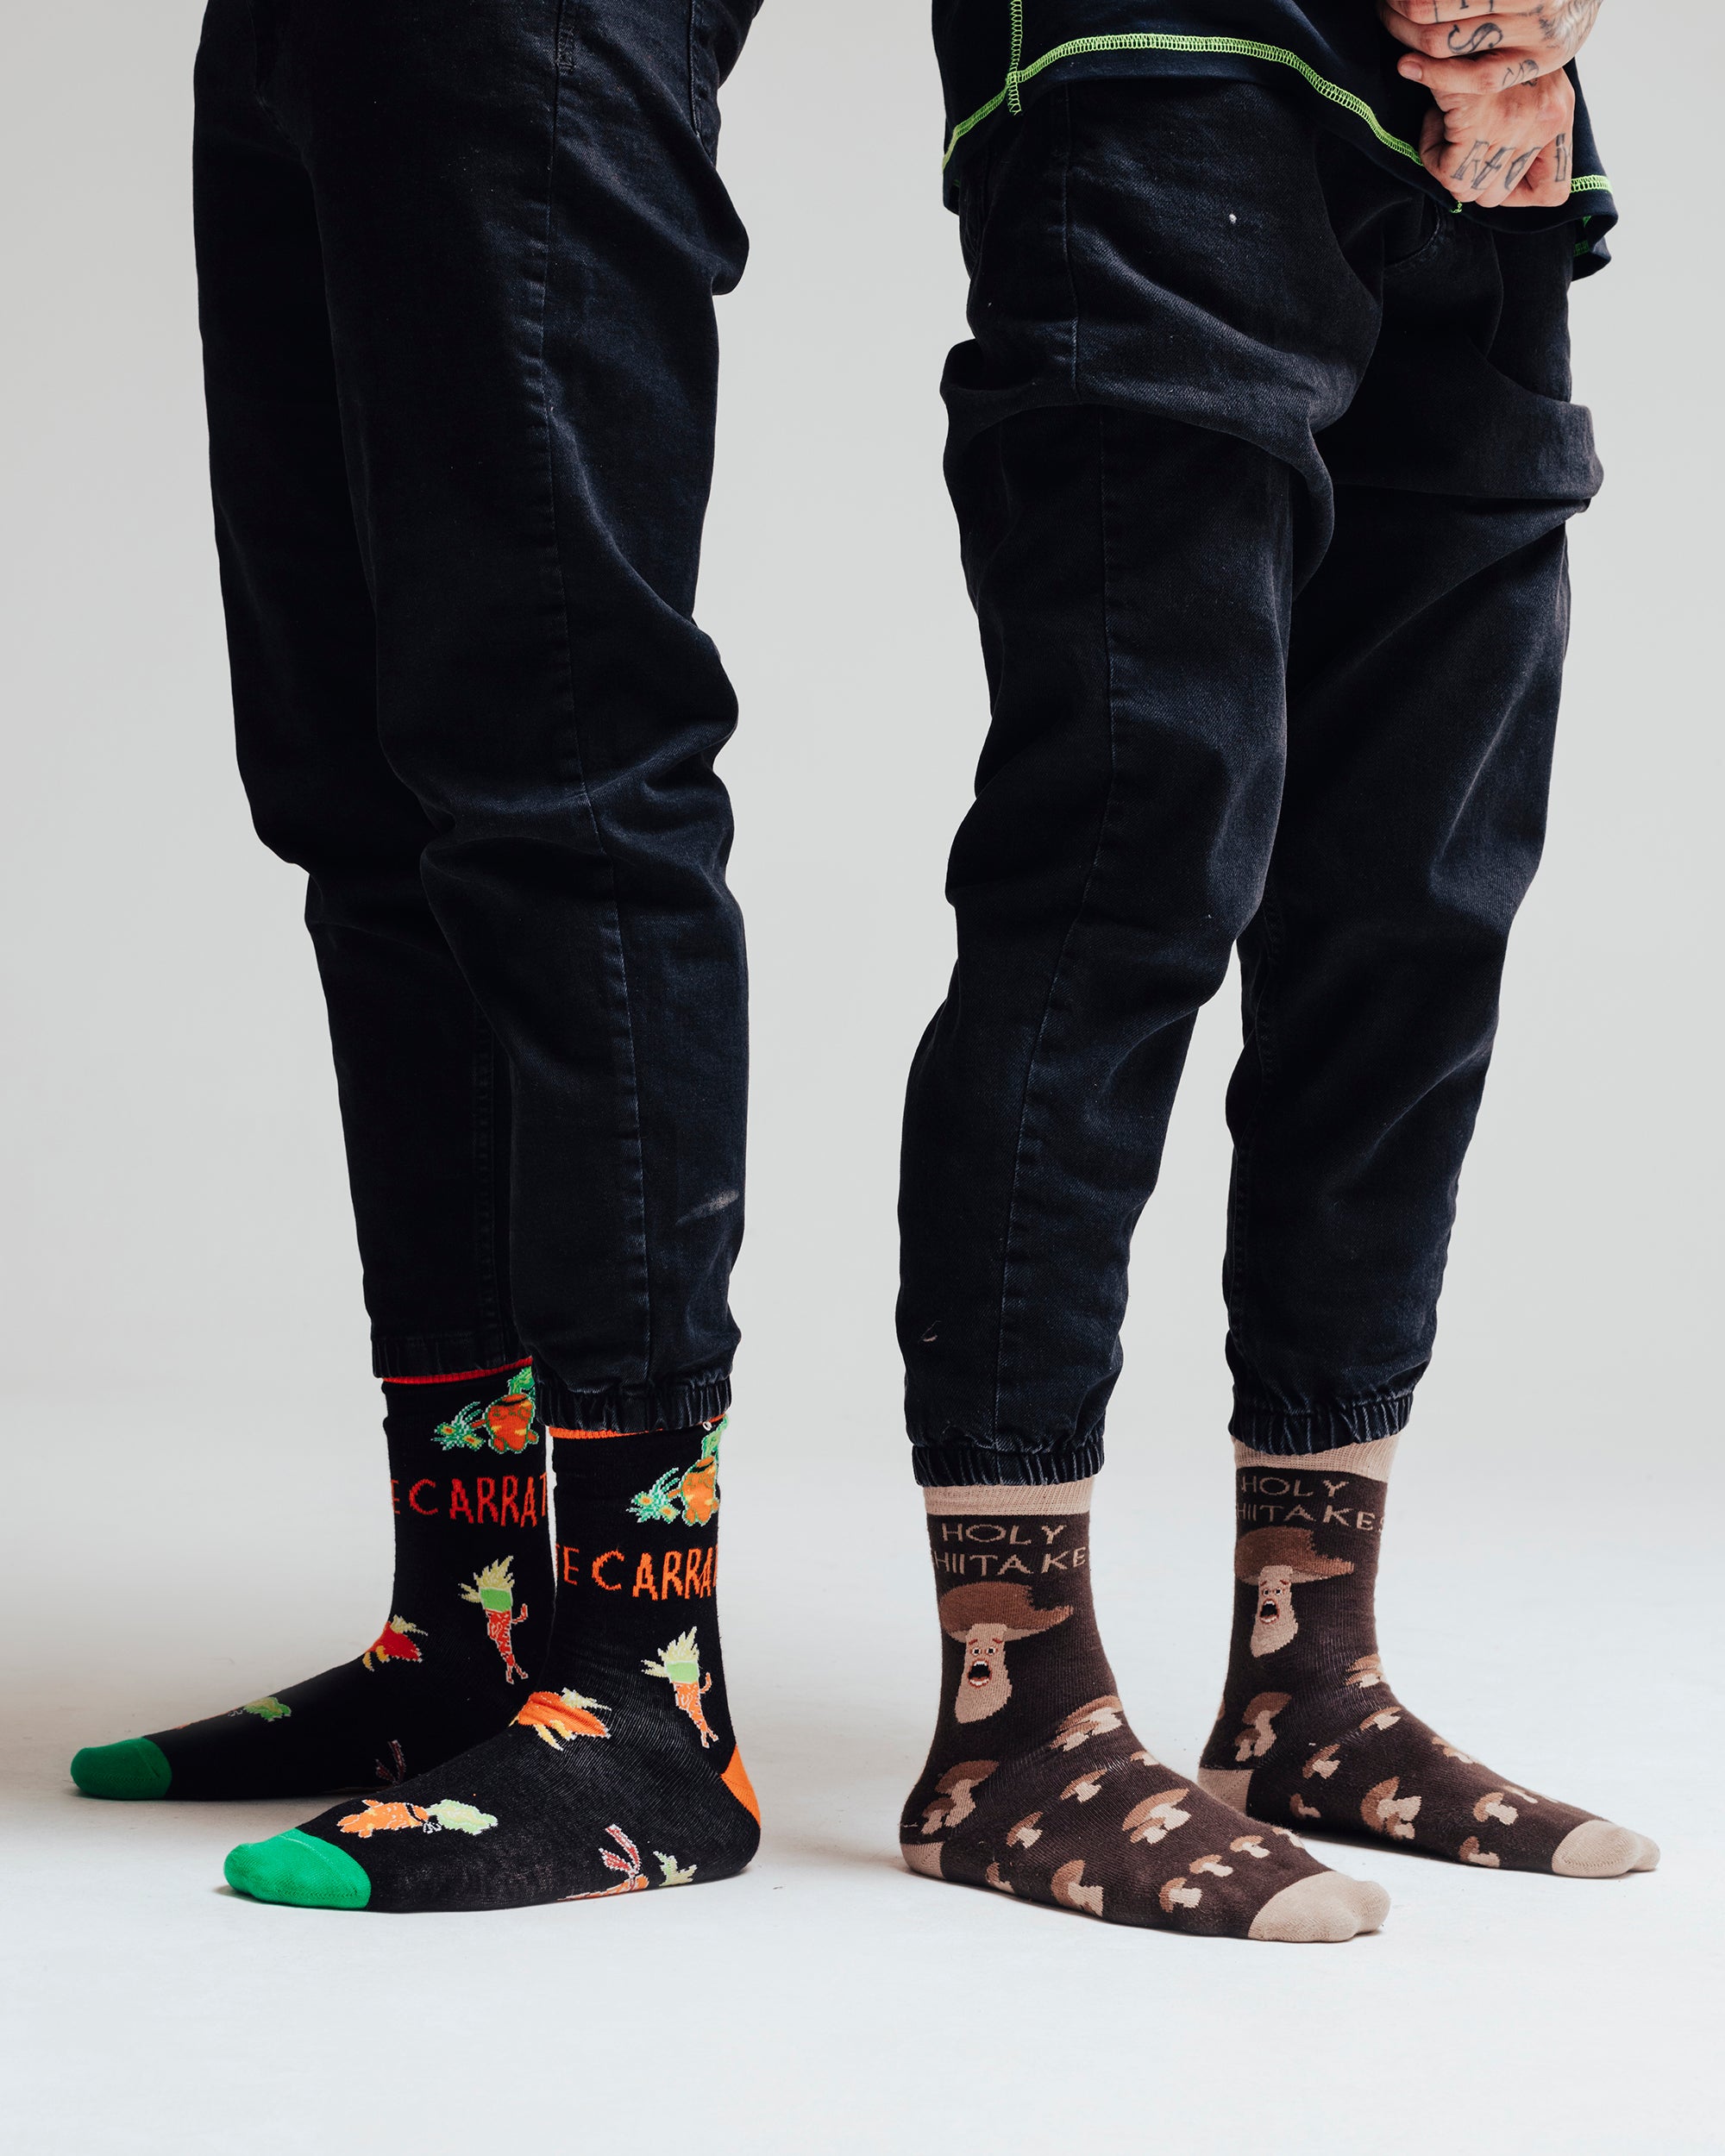 Men's Carrate Socks